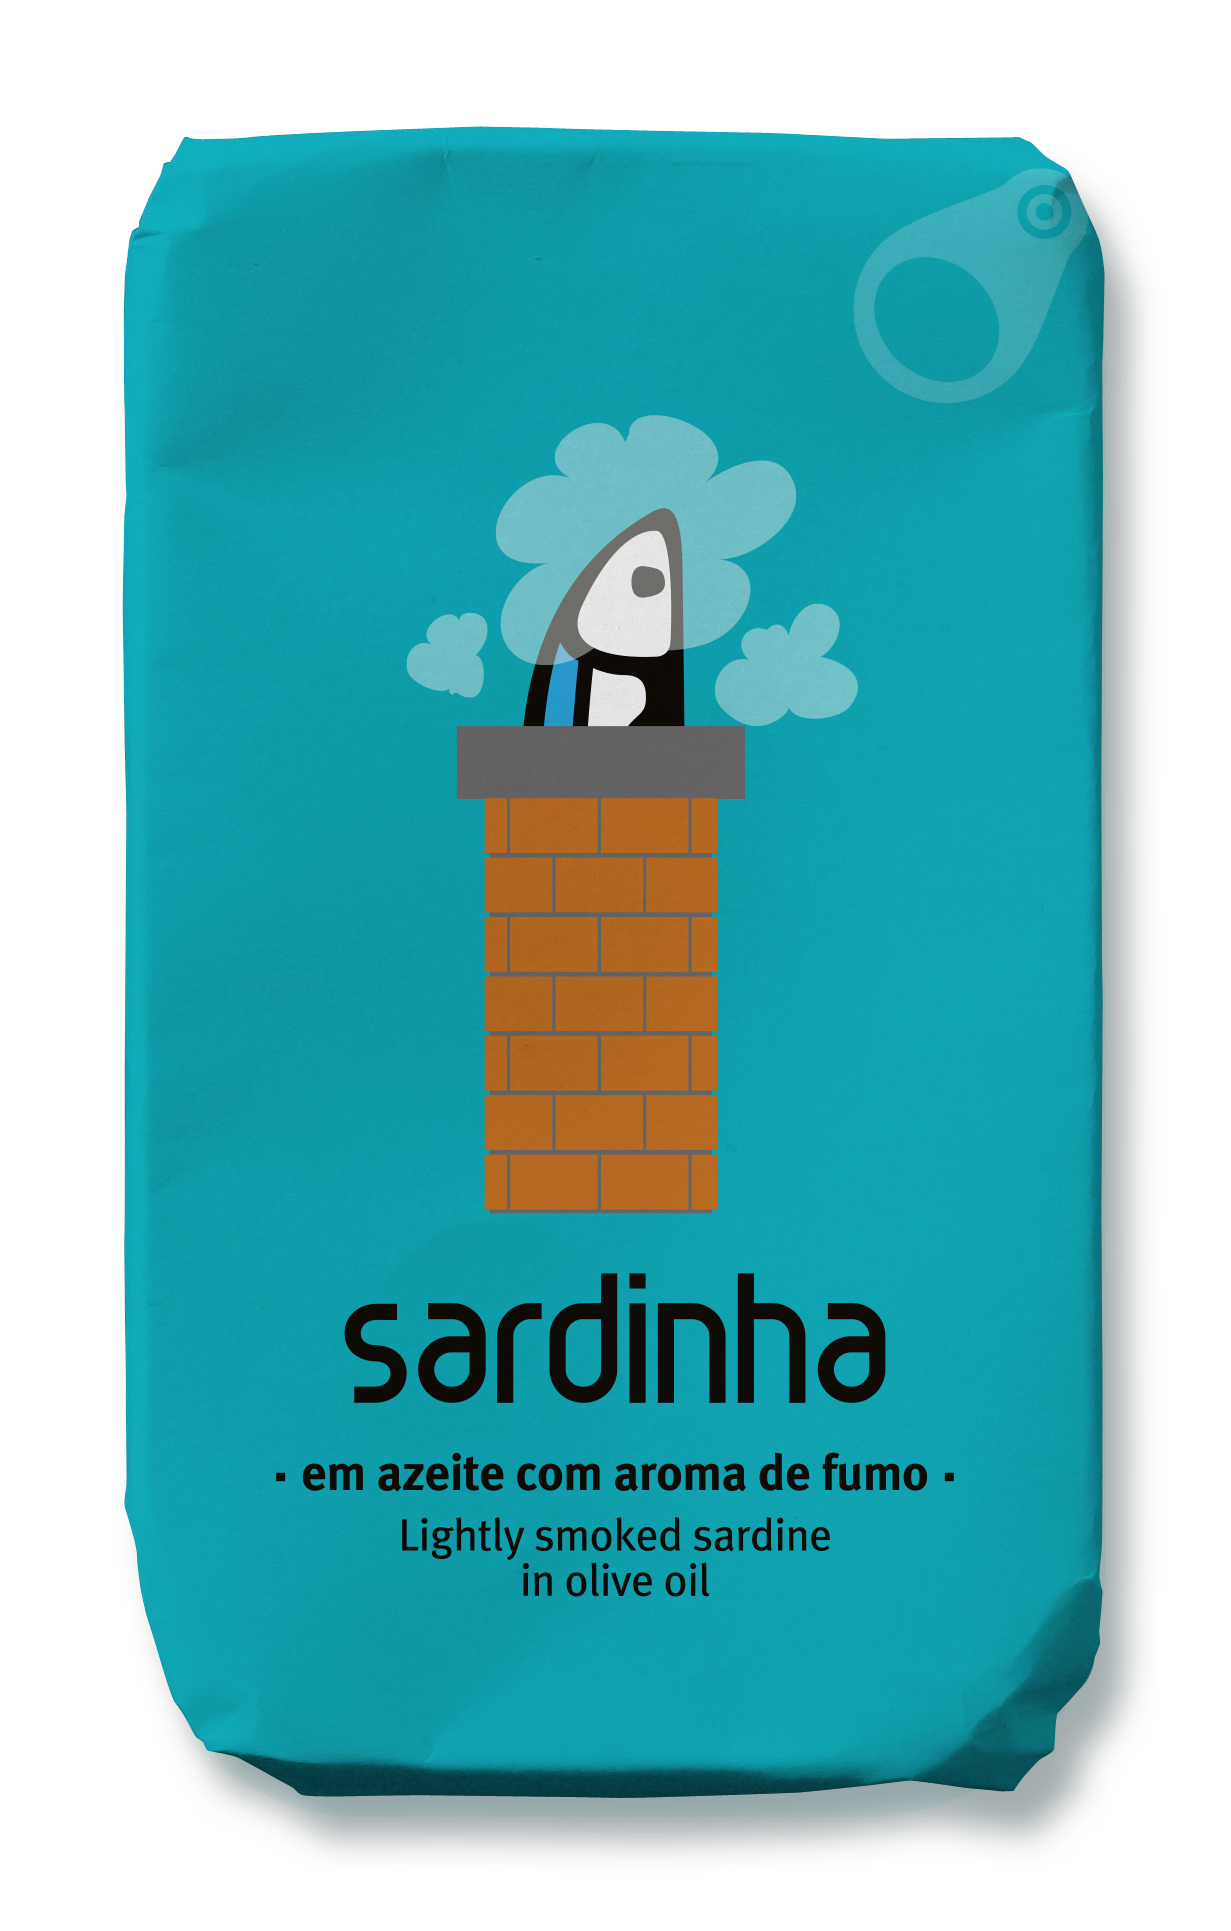 Sardinha - Sardine in olive oil with smoke aroma